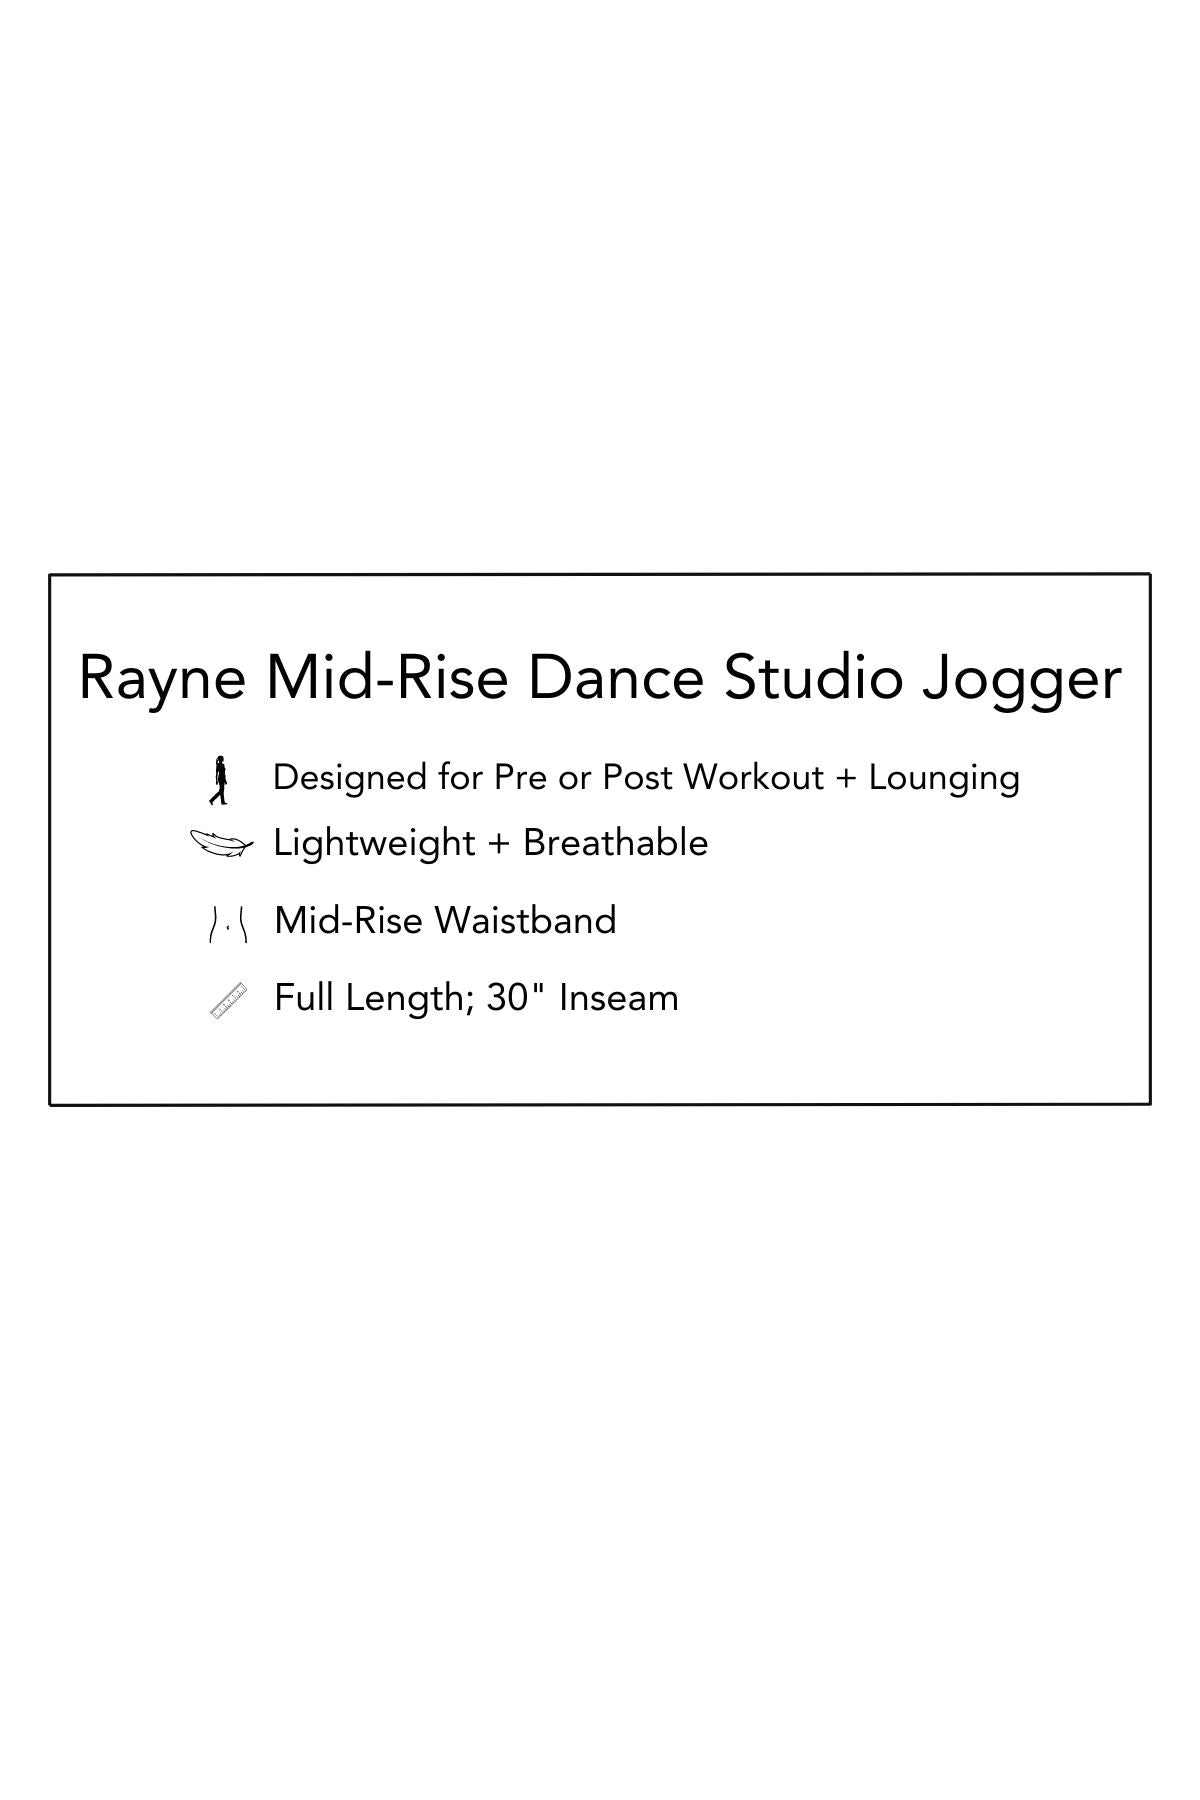 Rayne Mid-Rise Dance Studio Jogger - Java